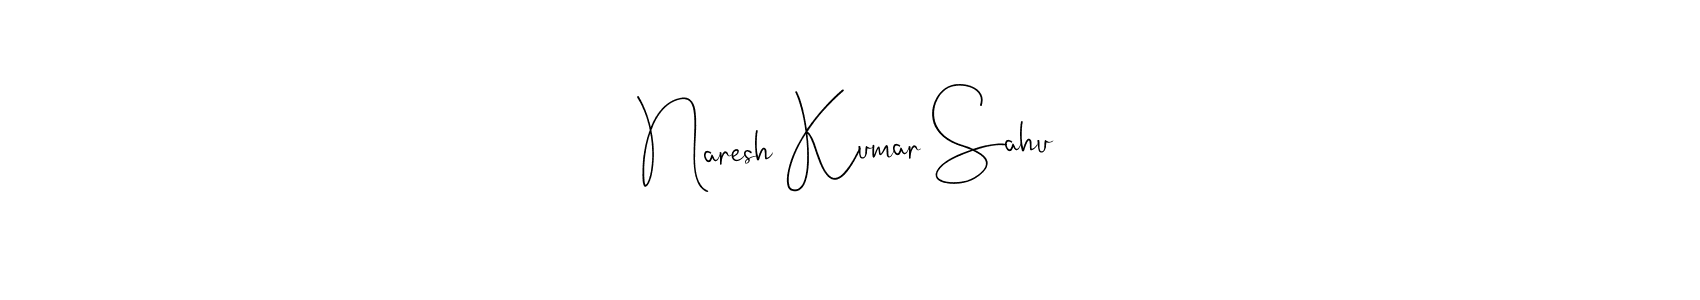 Make a beautiful signature design for name Naresh Kumar Sahu. Use this online signature maker to create a handwritten signature for free. Naresh Kumar Sahu signature style 4 images and pictures png